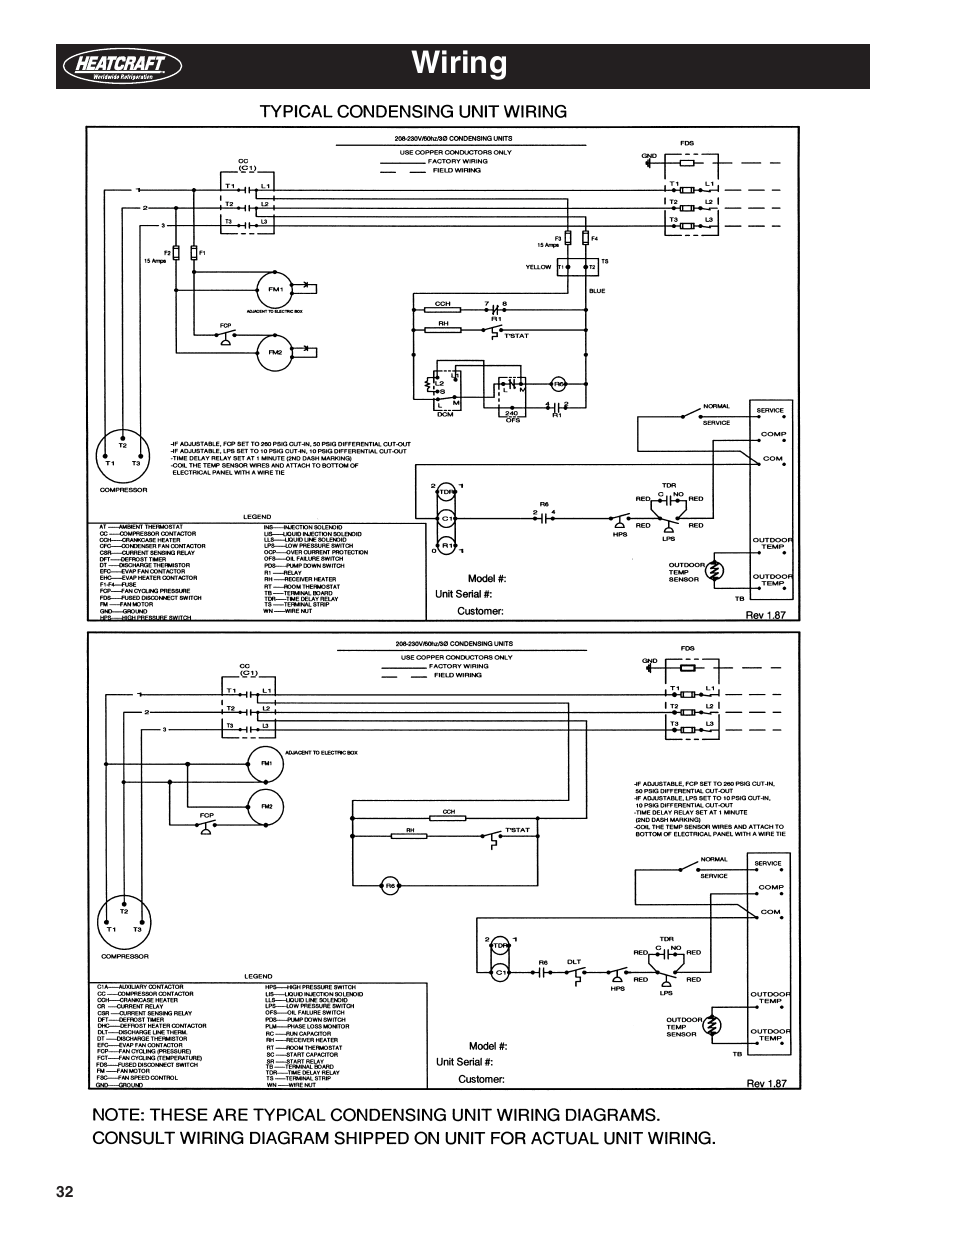 [DIAGRAM] Mahindra 3016 Wiring Diagram FULL Version HD Quality Wiring